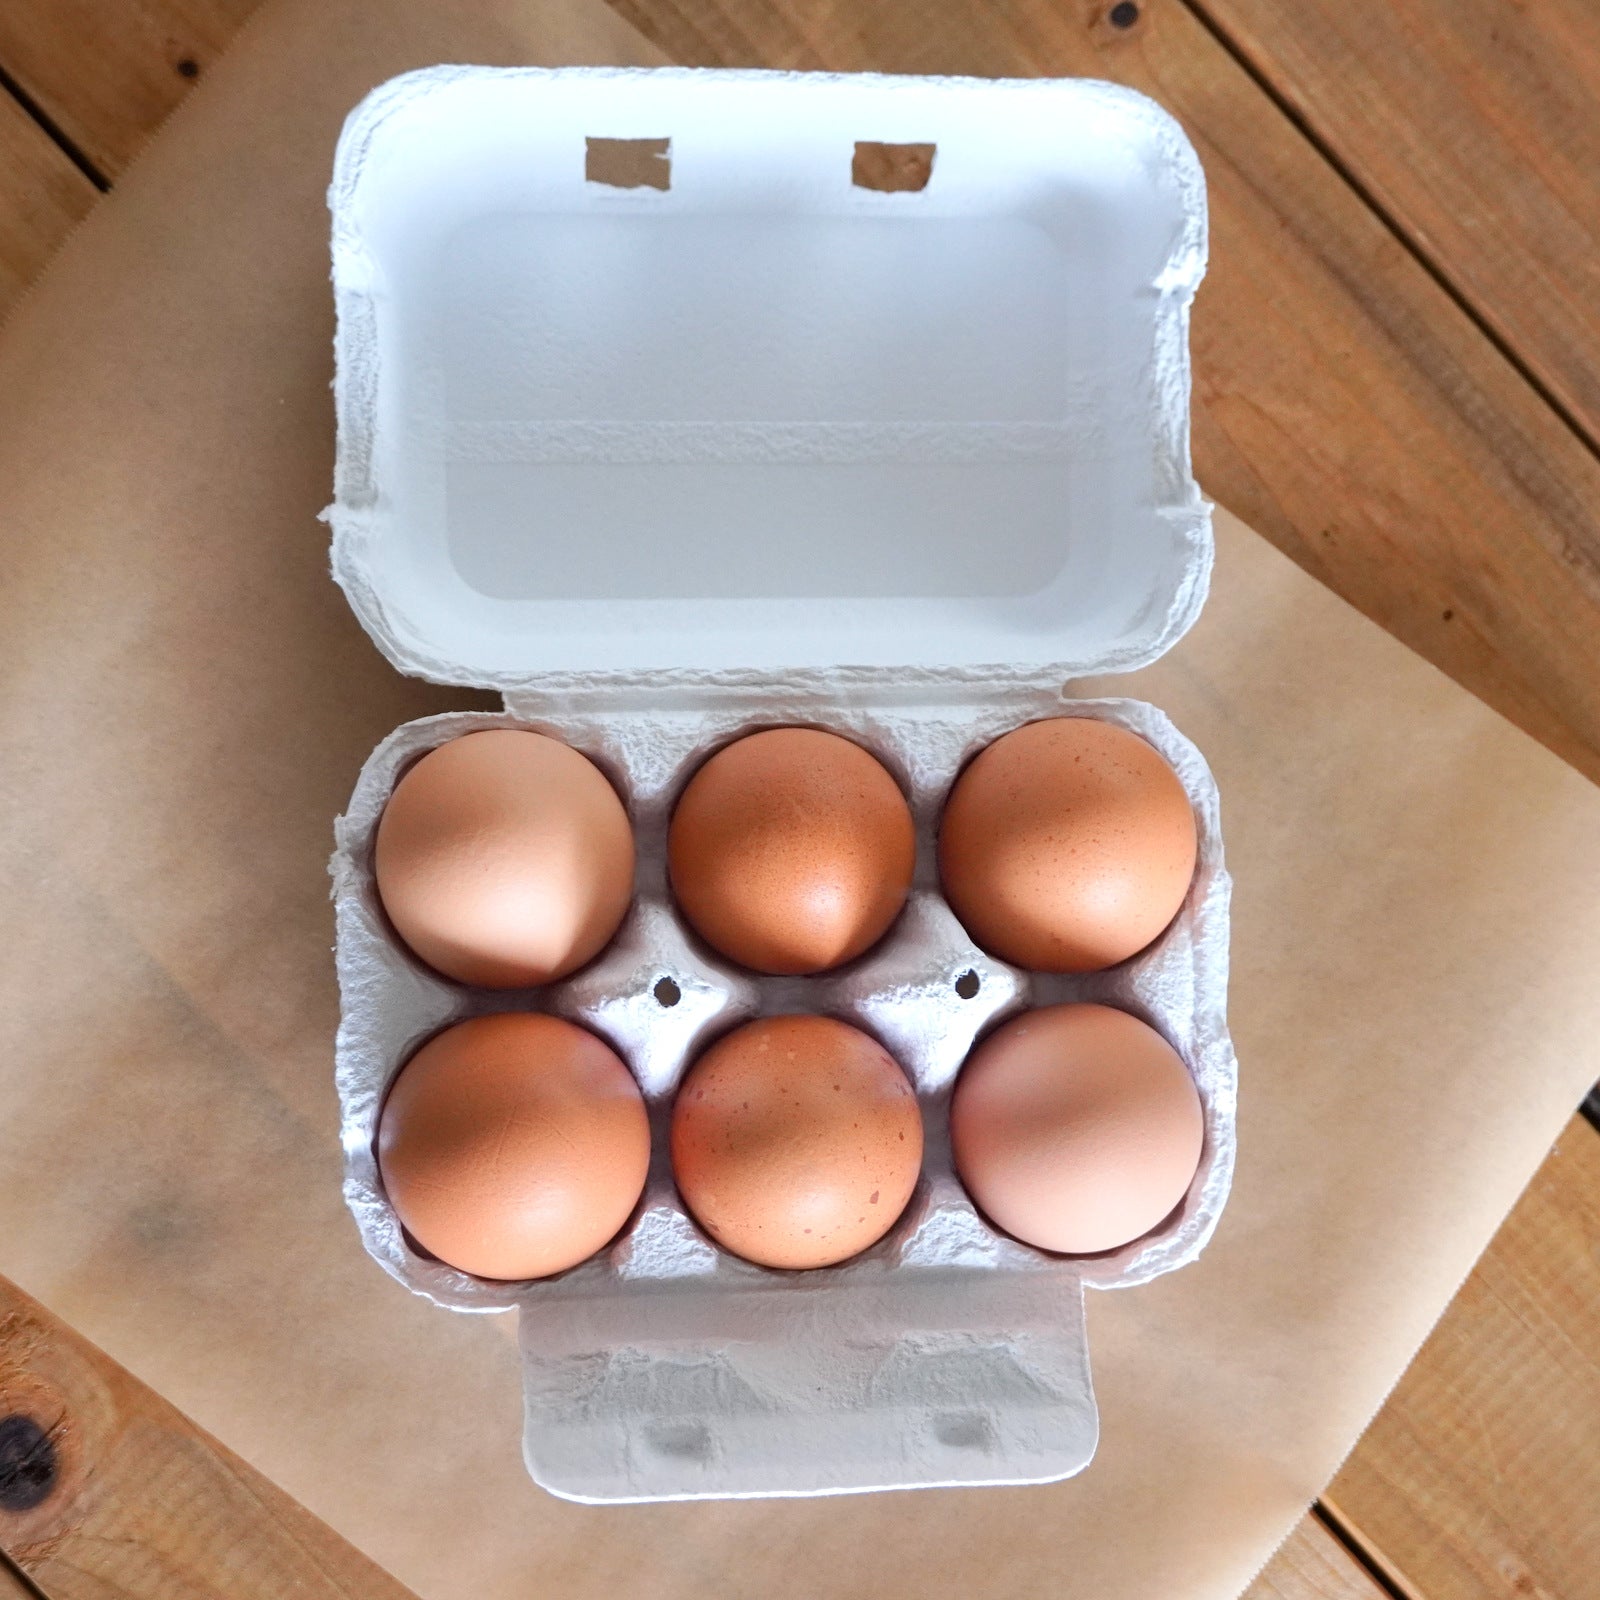 Certified Organic Free-Range Eggs from Japan (12-30 Eggs) - Horizon Farms